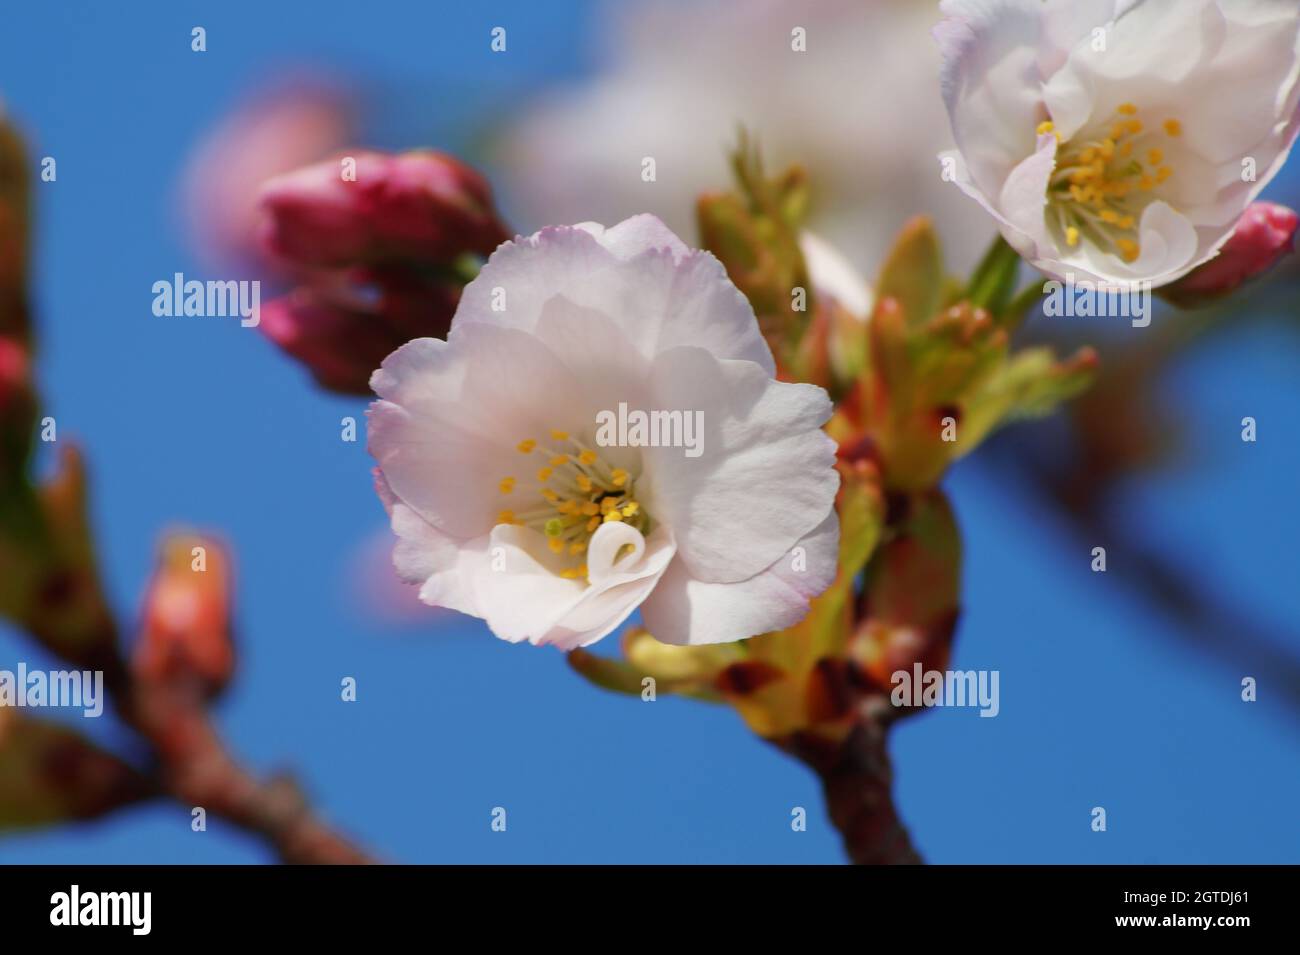 Close-up Of White Cherry Blossom Stock Photo